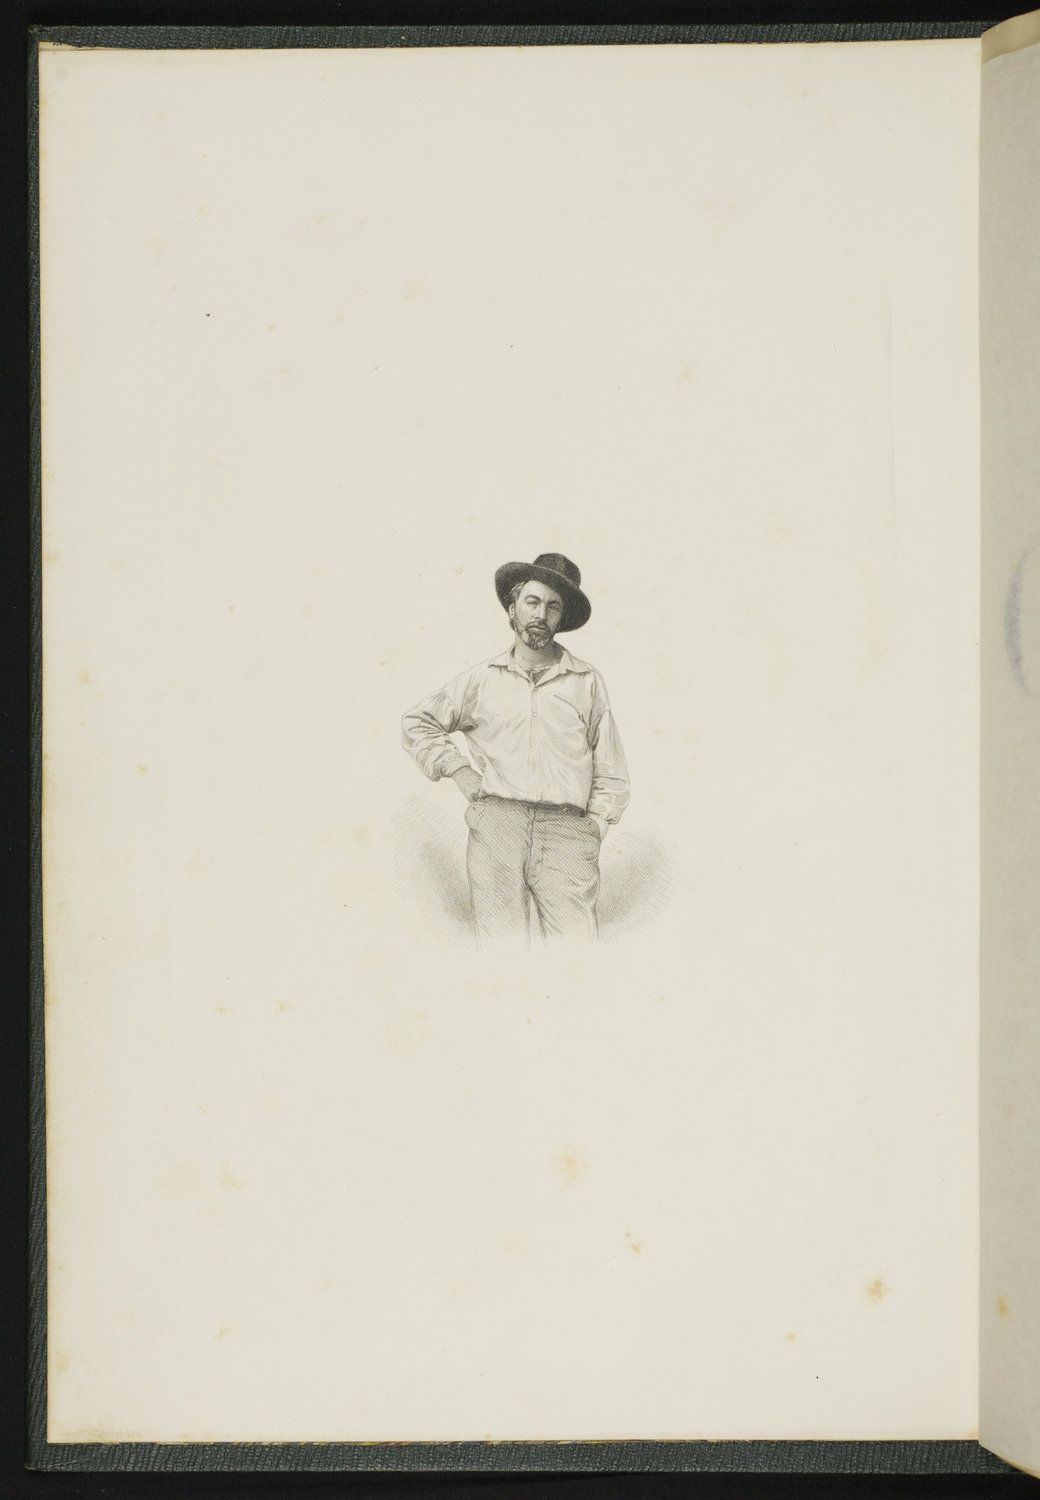 1855 frontispiece